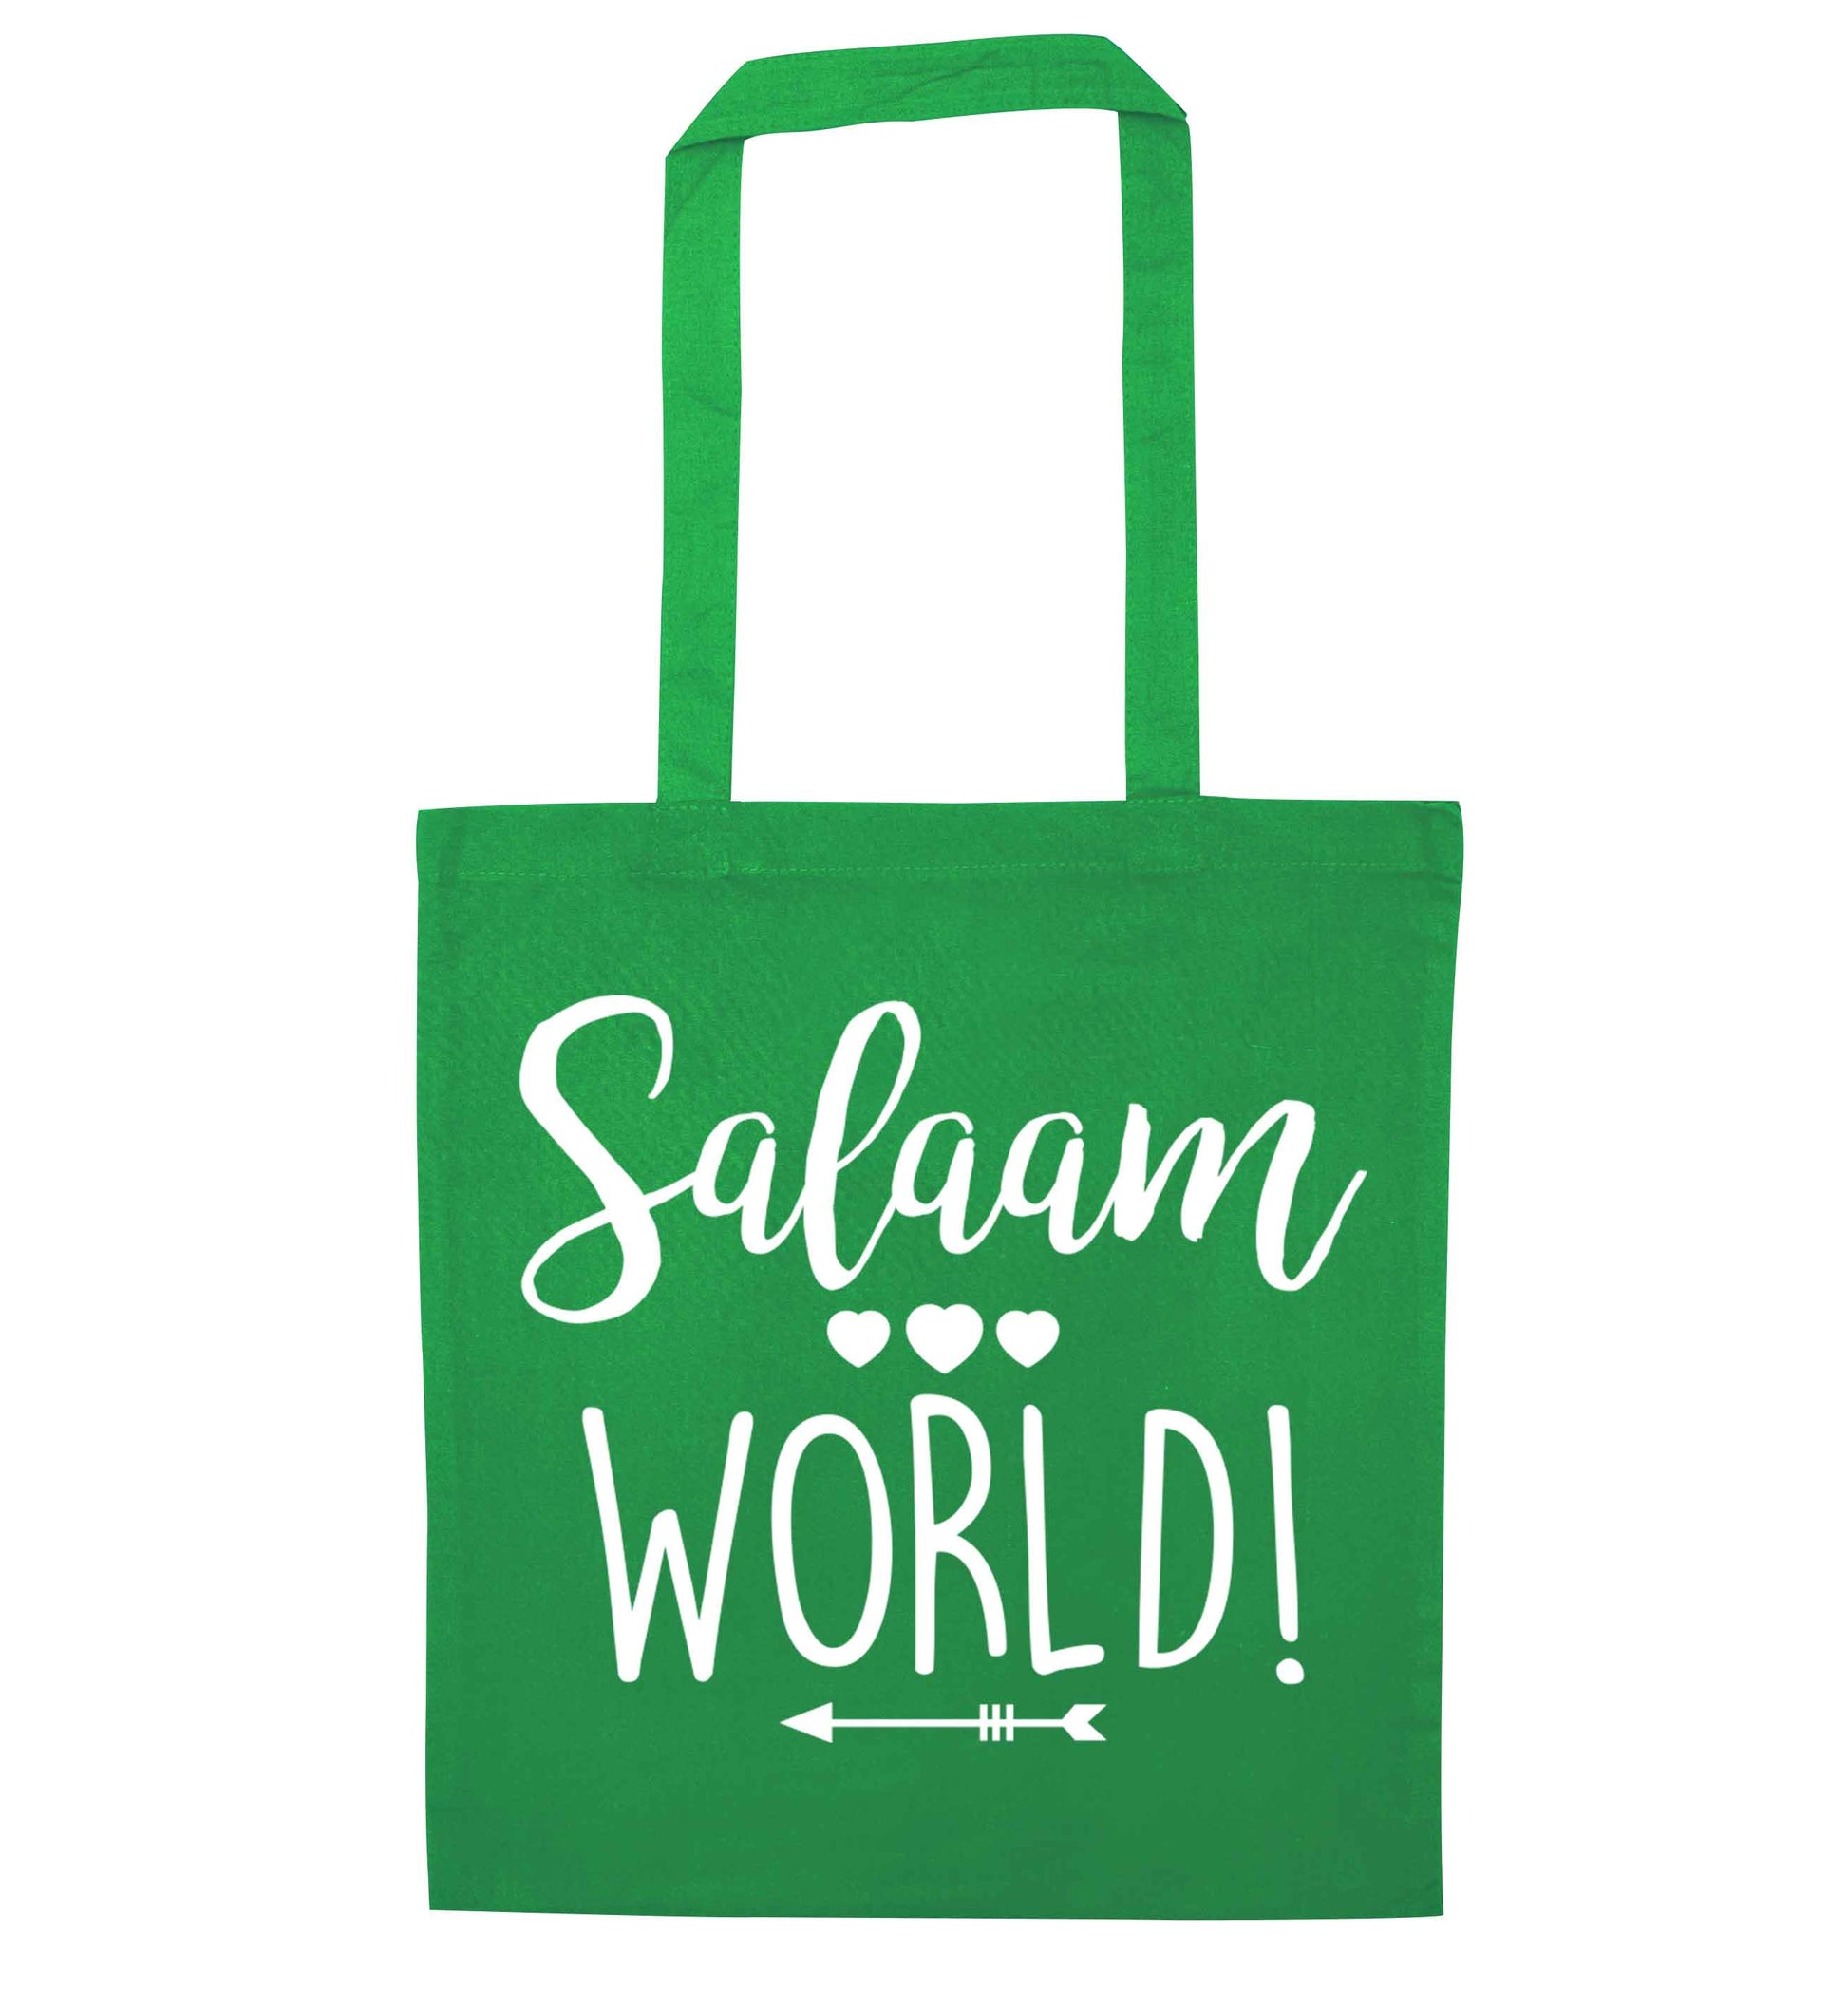 Salaam world green tote bag